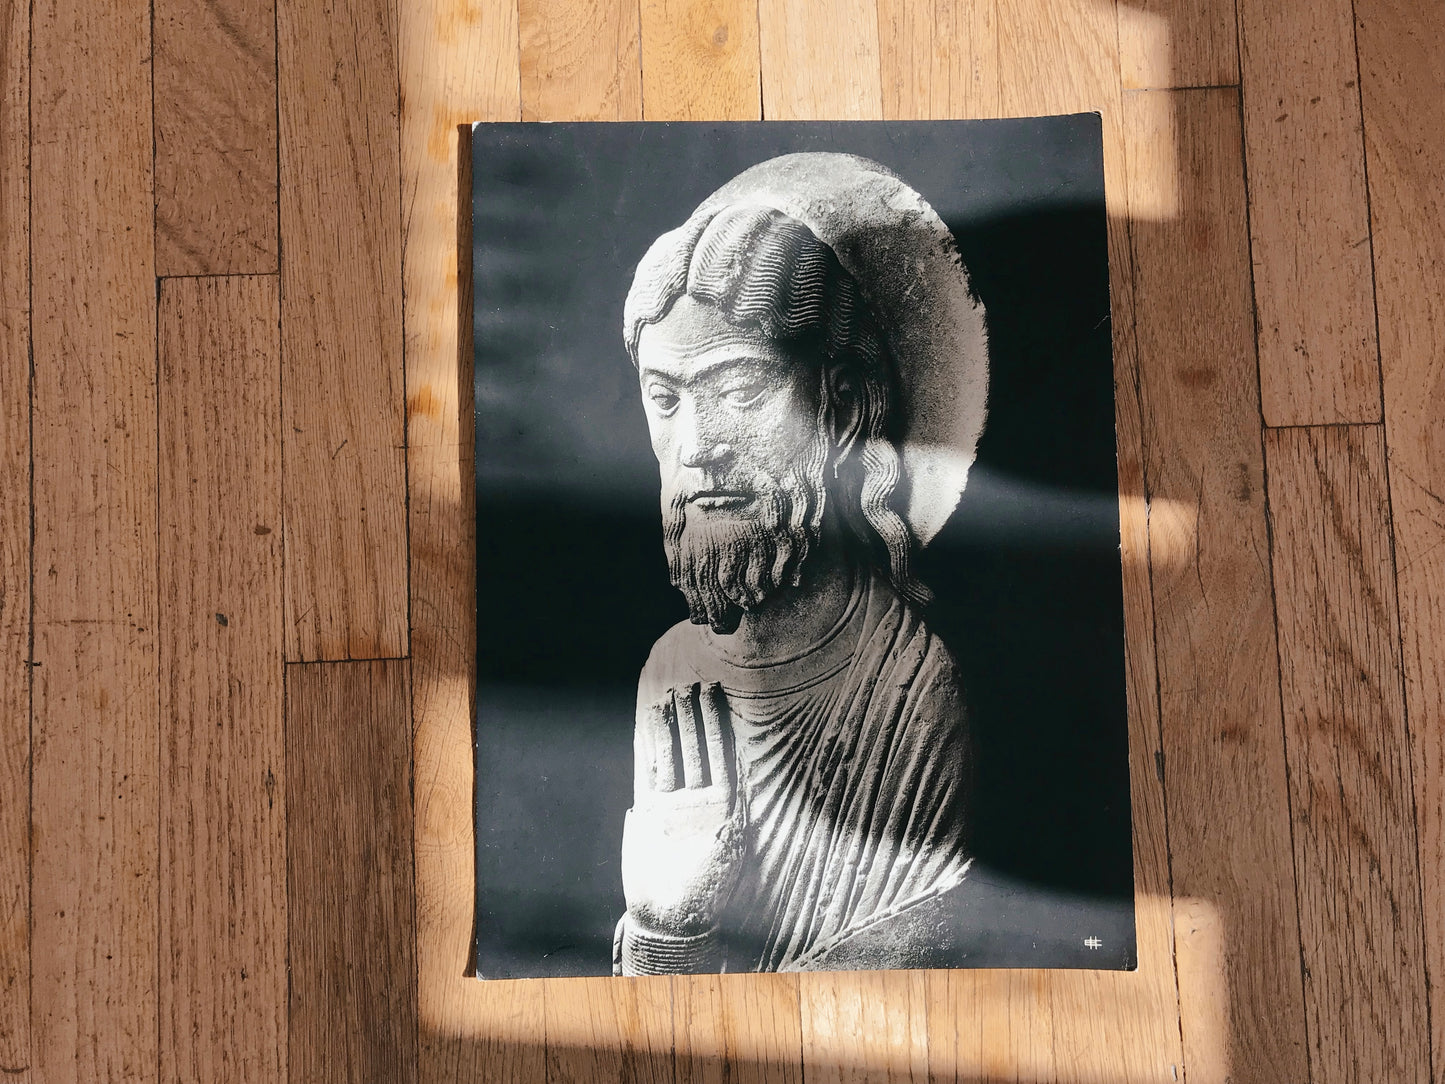 Photograph Print - Biblical Character